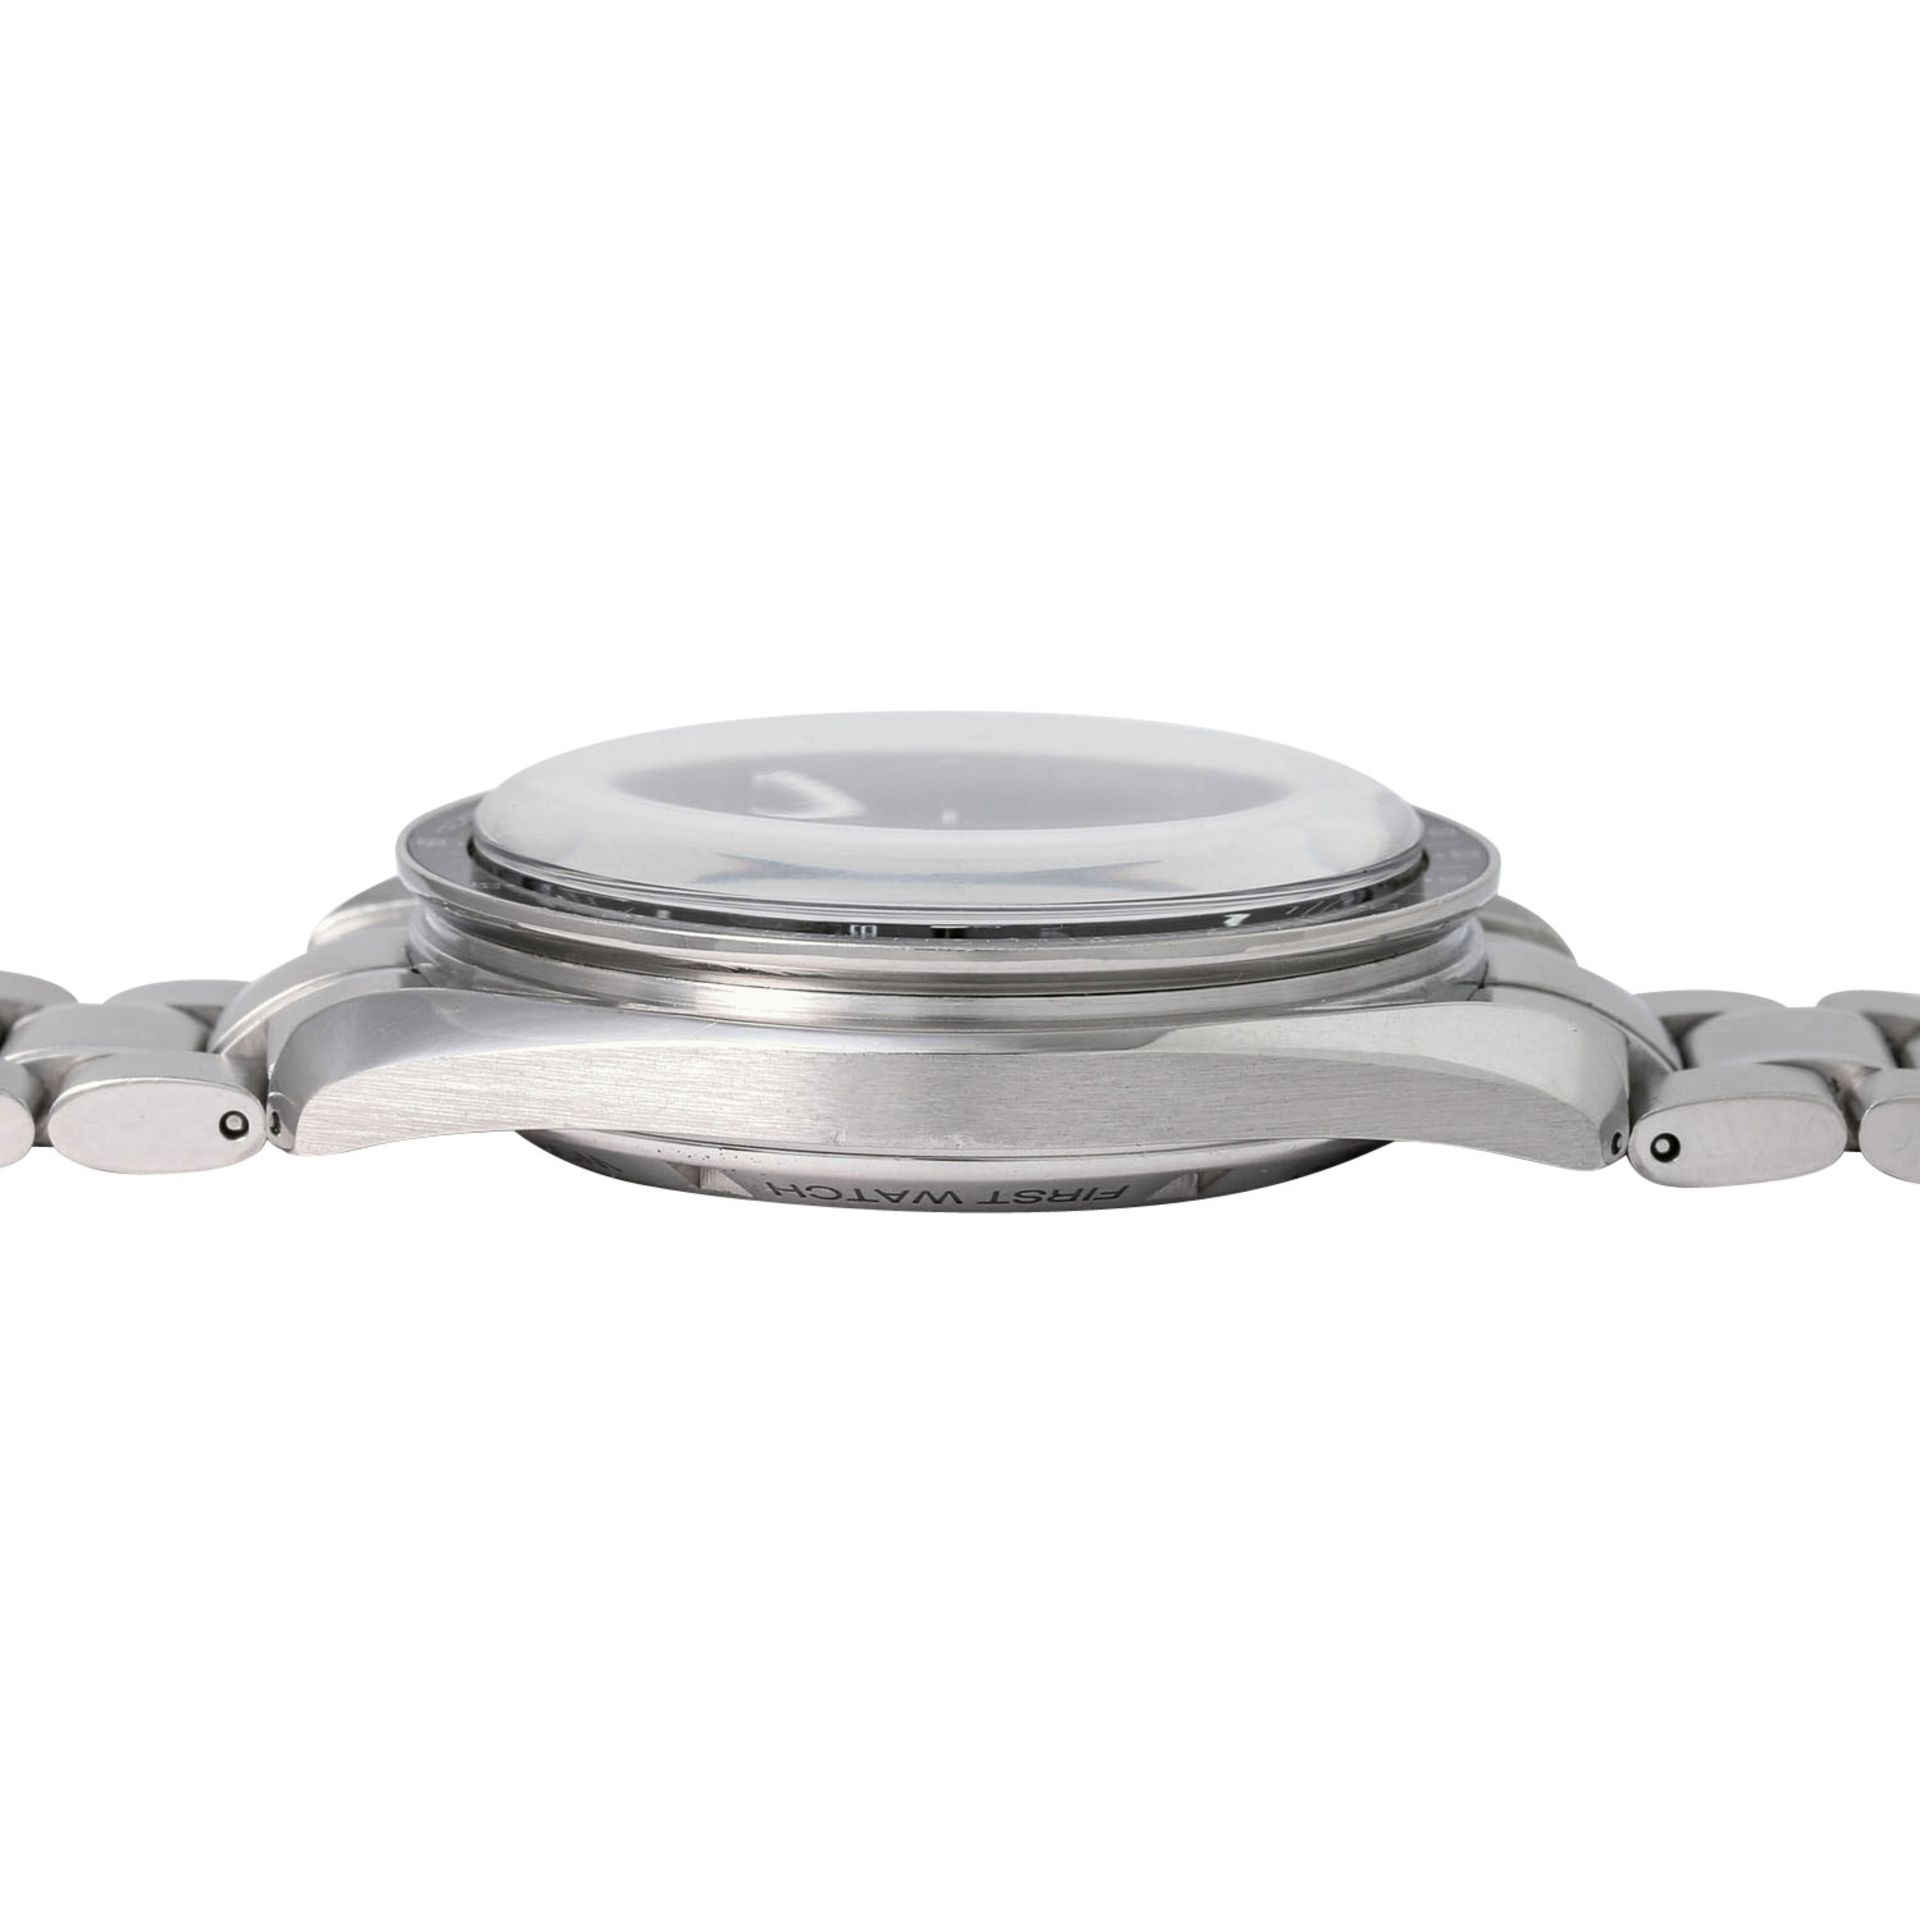 OMEGA Speedmaster Professional Moonwatch, Ref. 3872.50.01. Armbanduhr. - Bild 4 aus 10